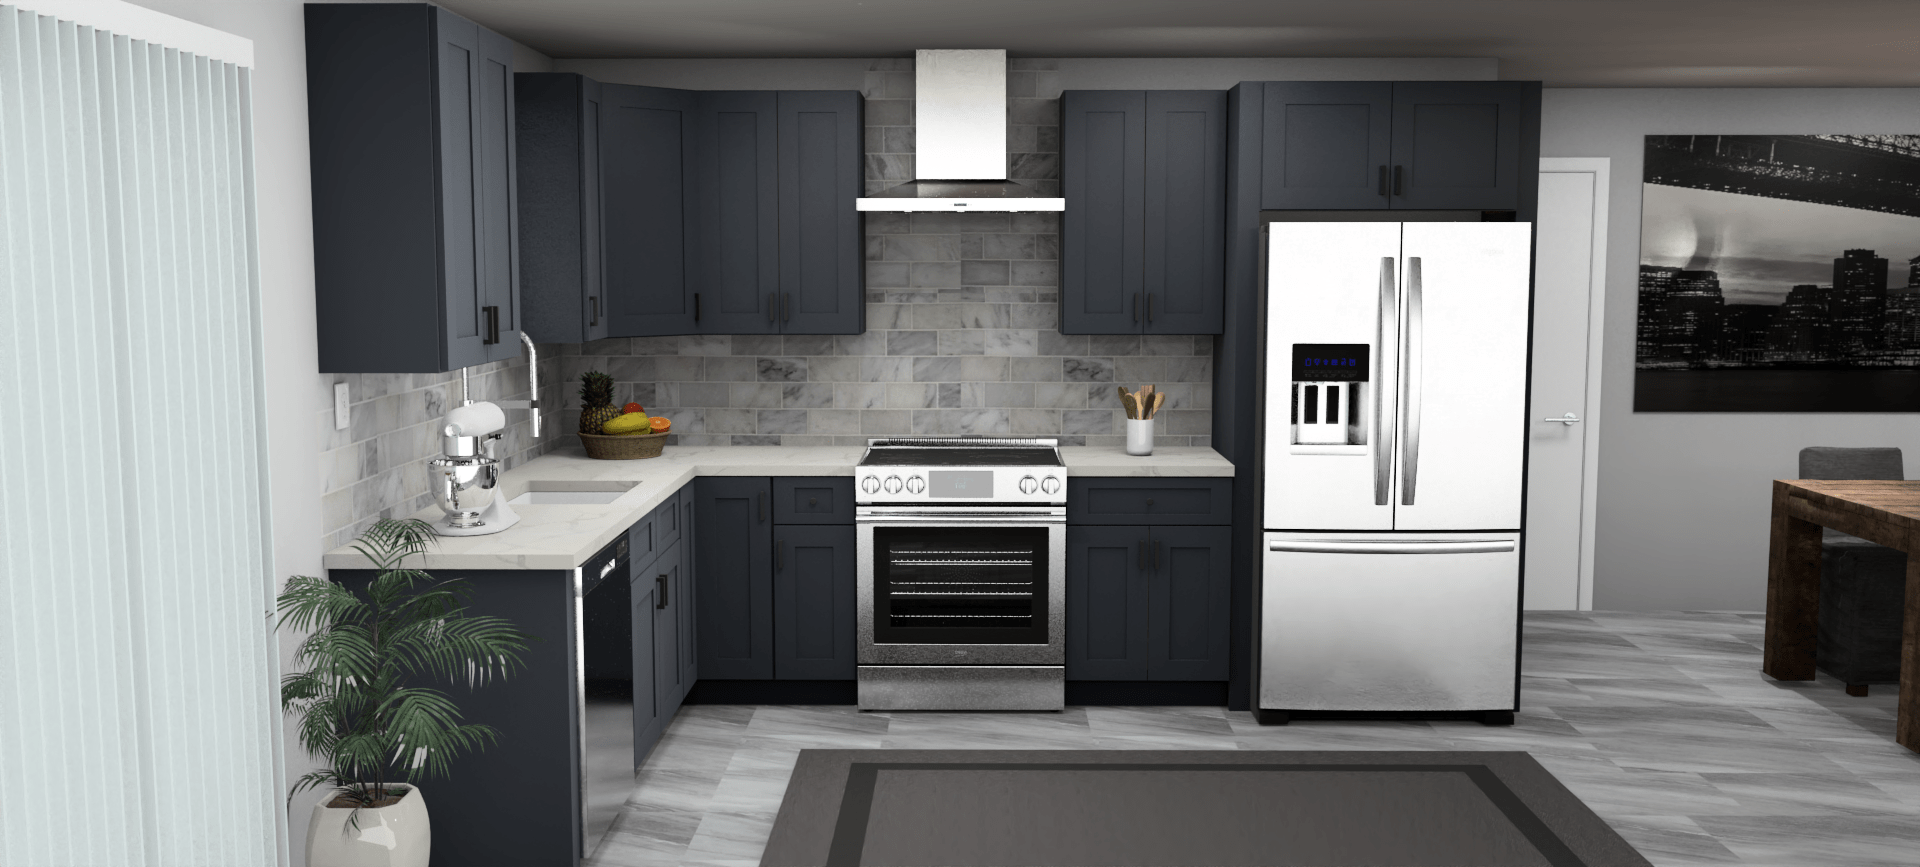 Fabuwood Allure Galaxy Indigo 8 x 12 L Shaped Kitchen Front Layout Photo